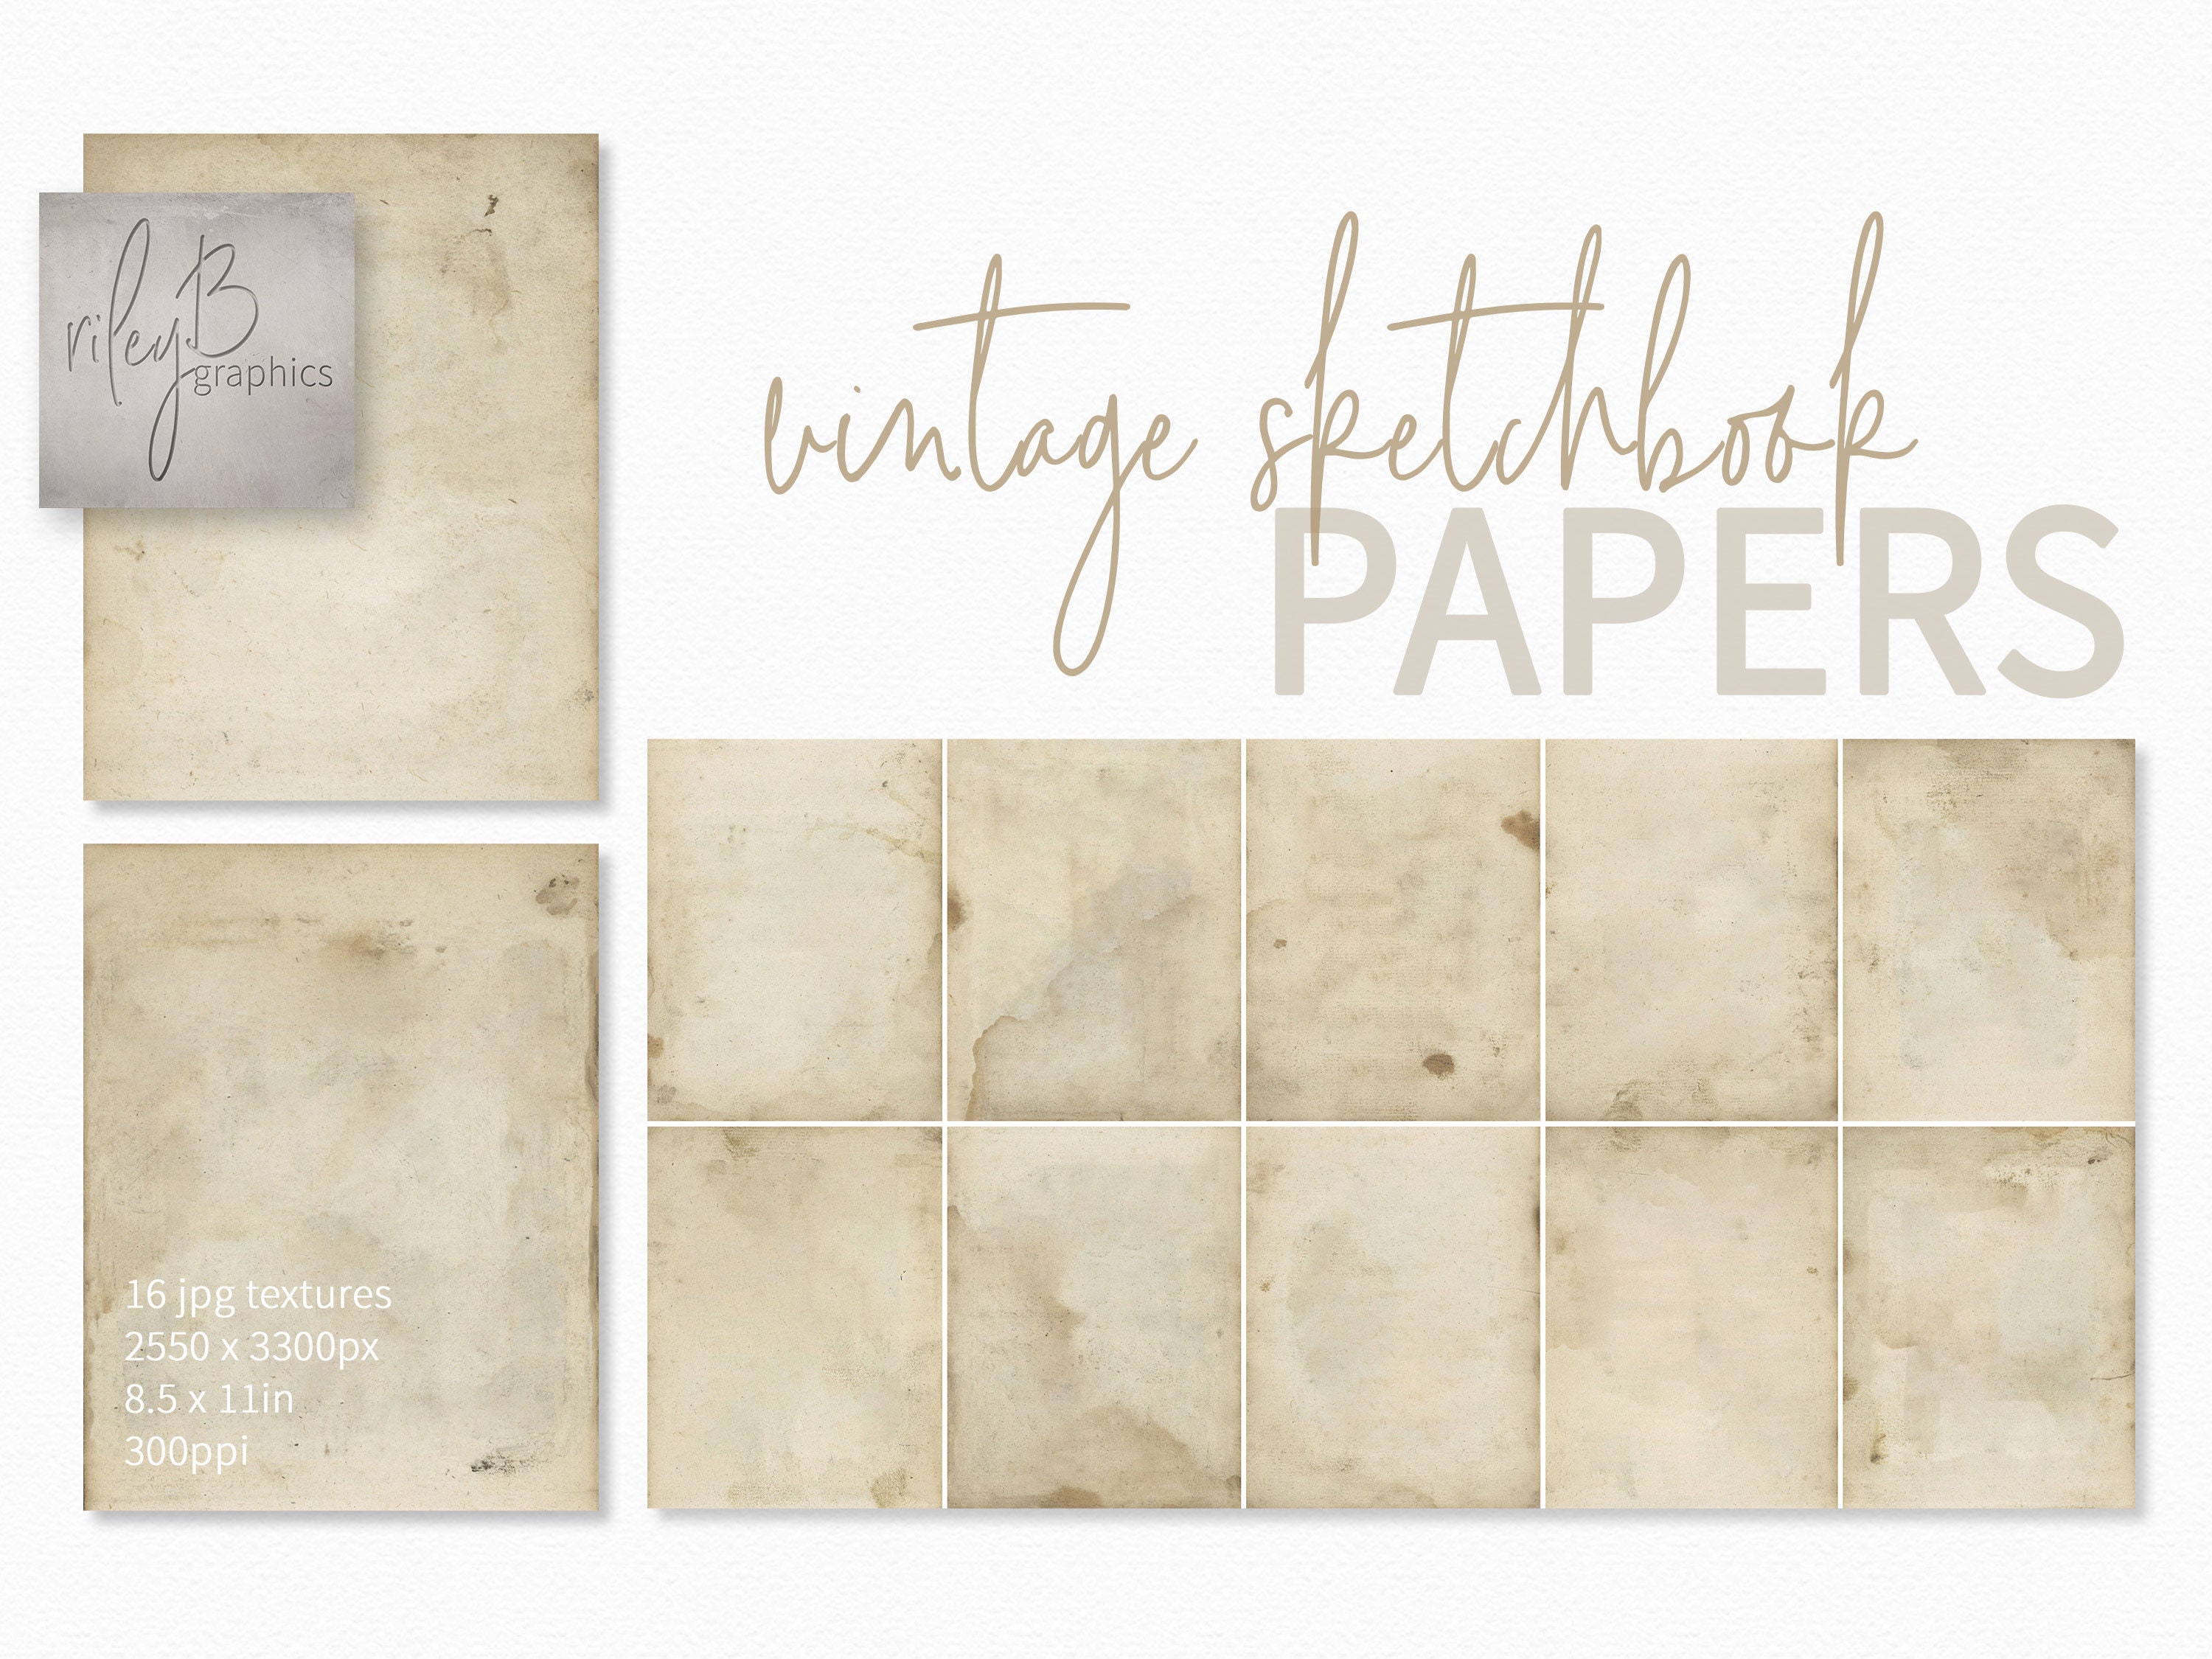 Old Paper Textures, Parchment Paper, Printable Aged Paper Textures